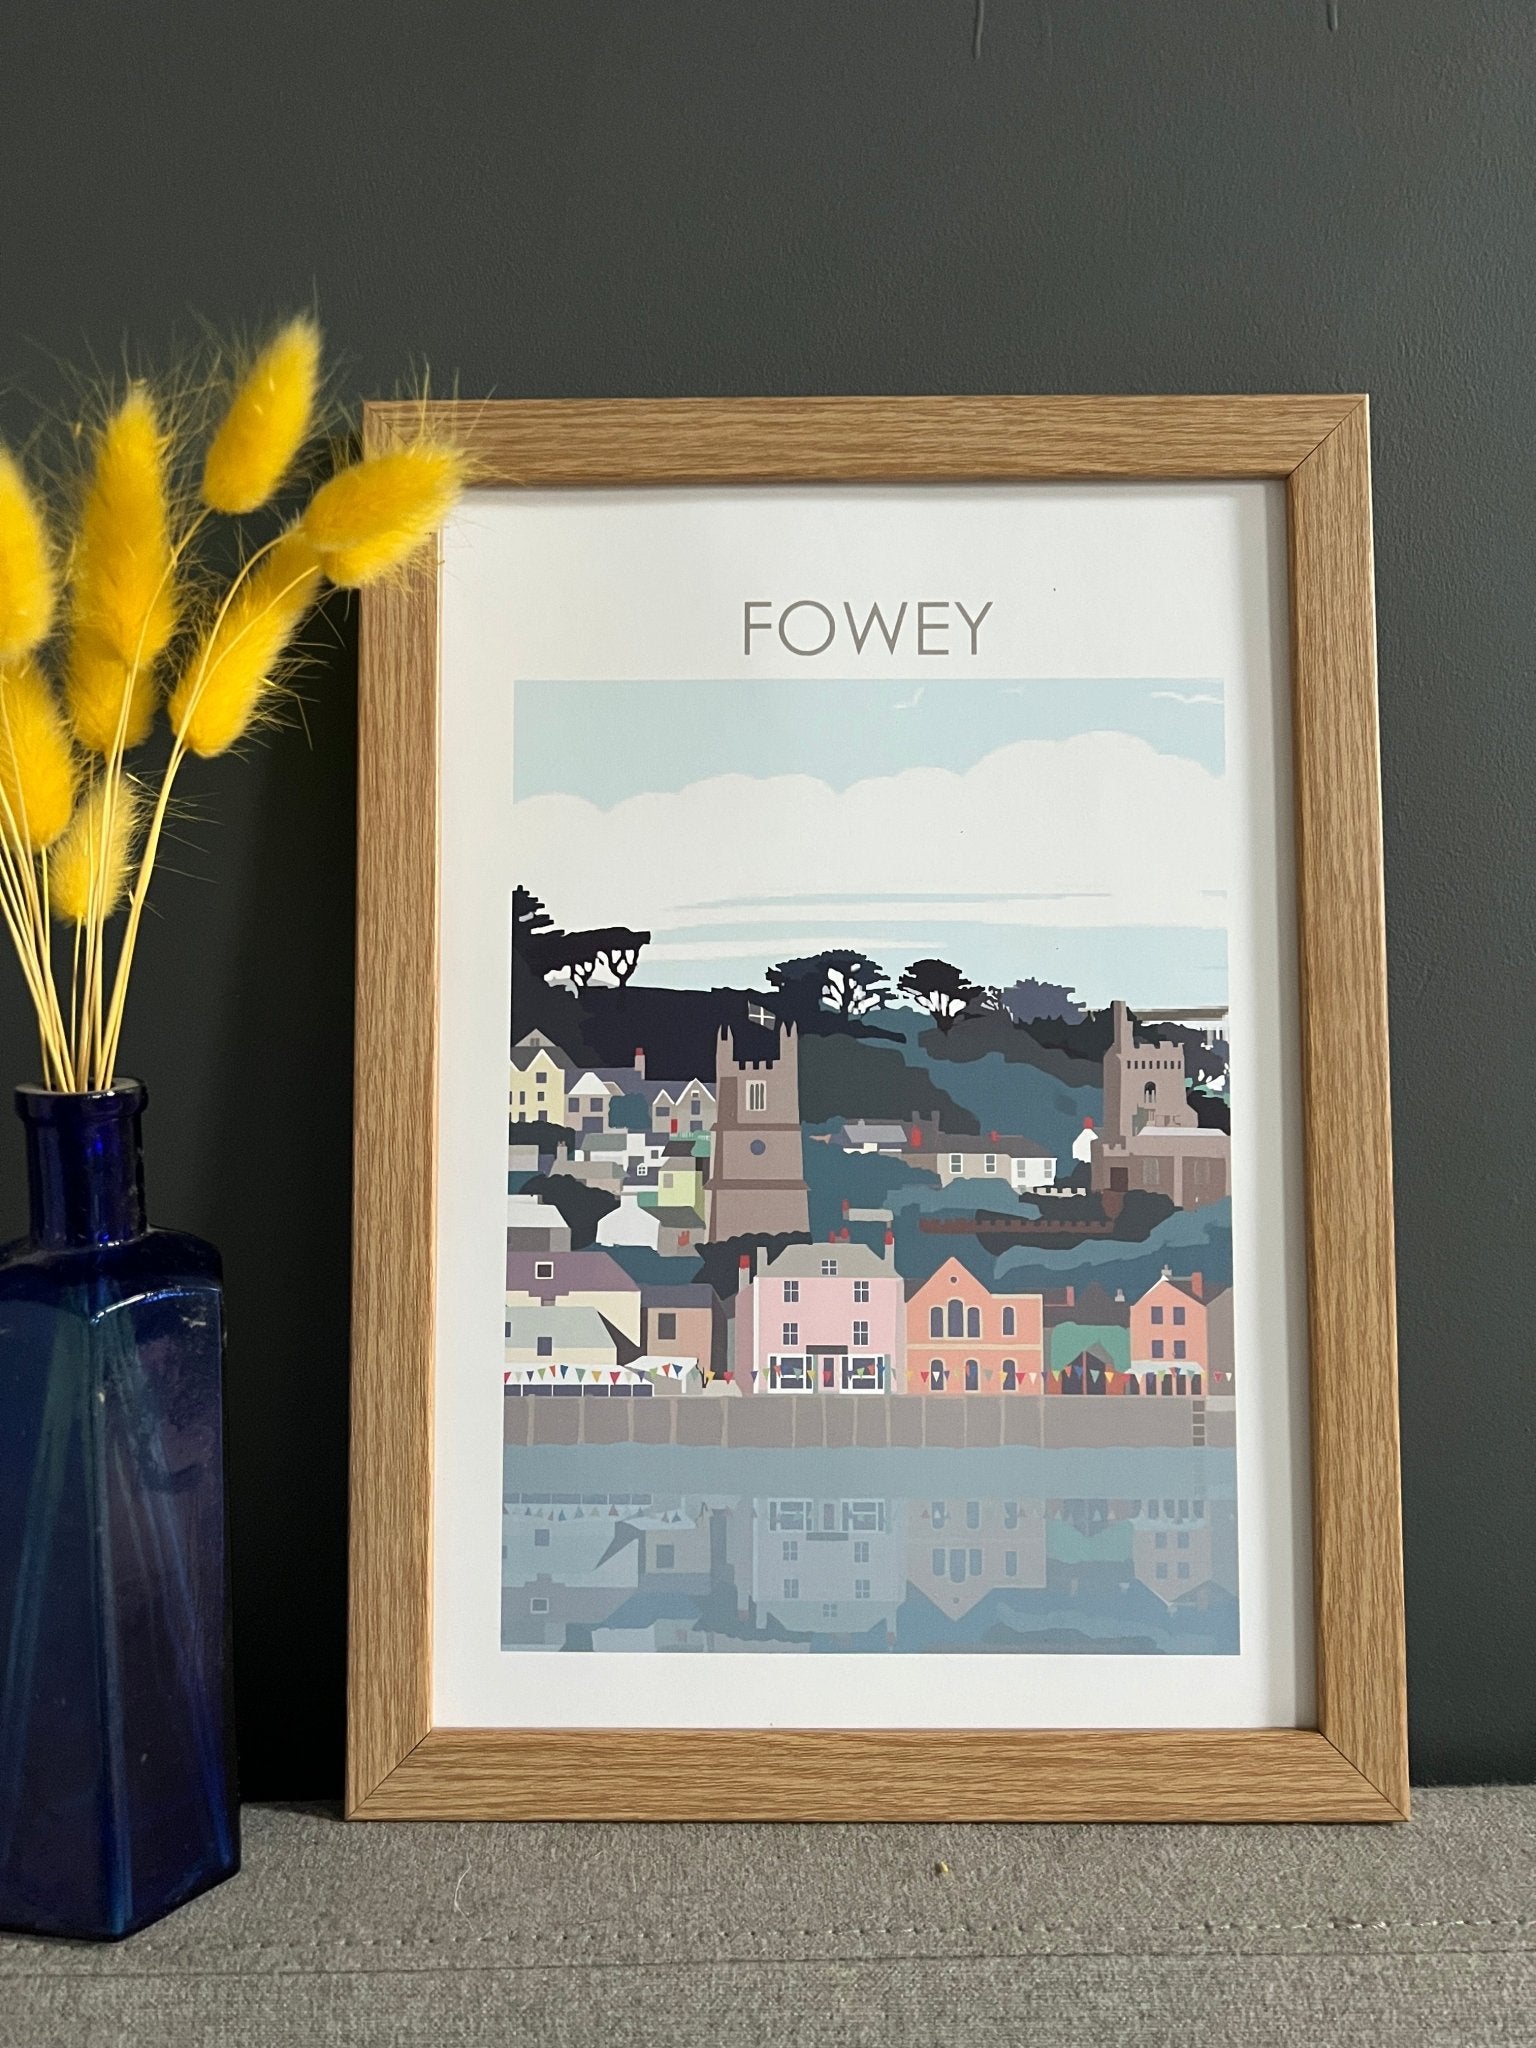 Readymoney Cove & Fowey Illustrated Prints, A4 & A3 - Readymoney Beach Shop